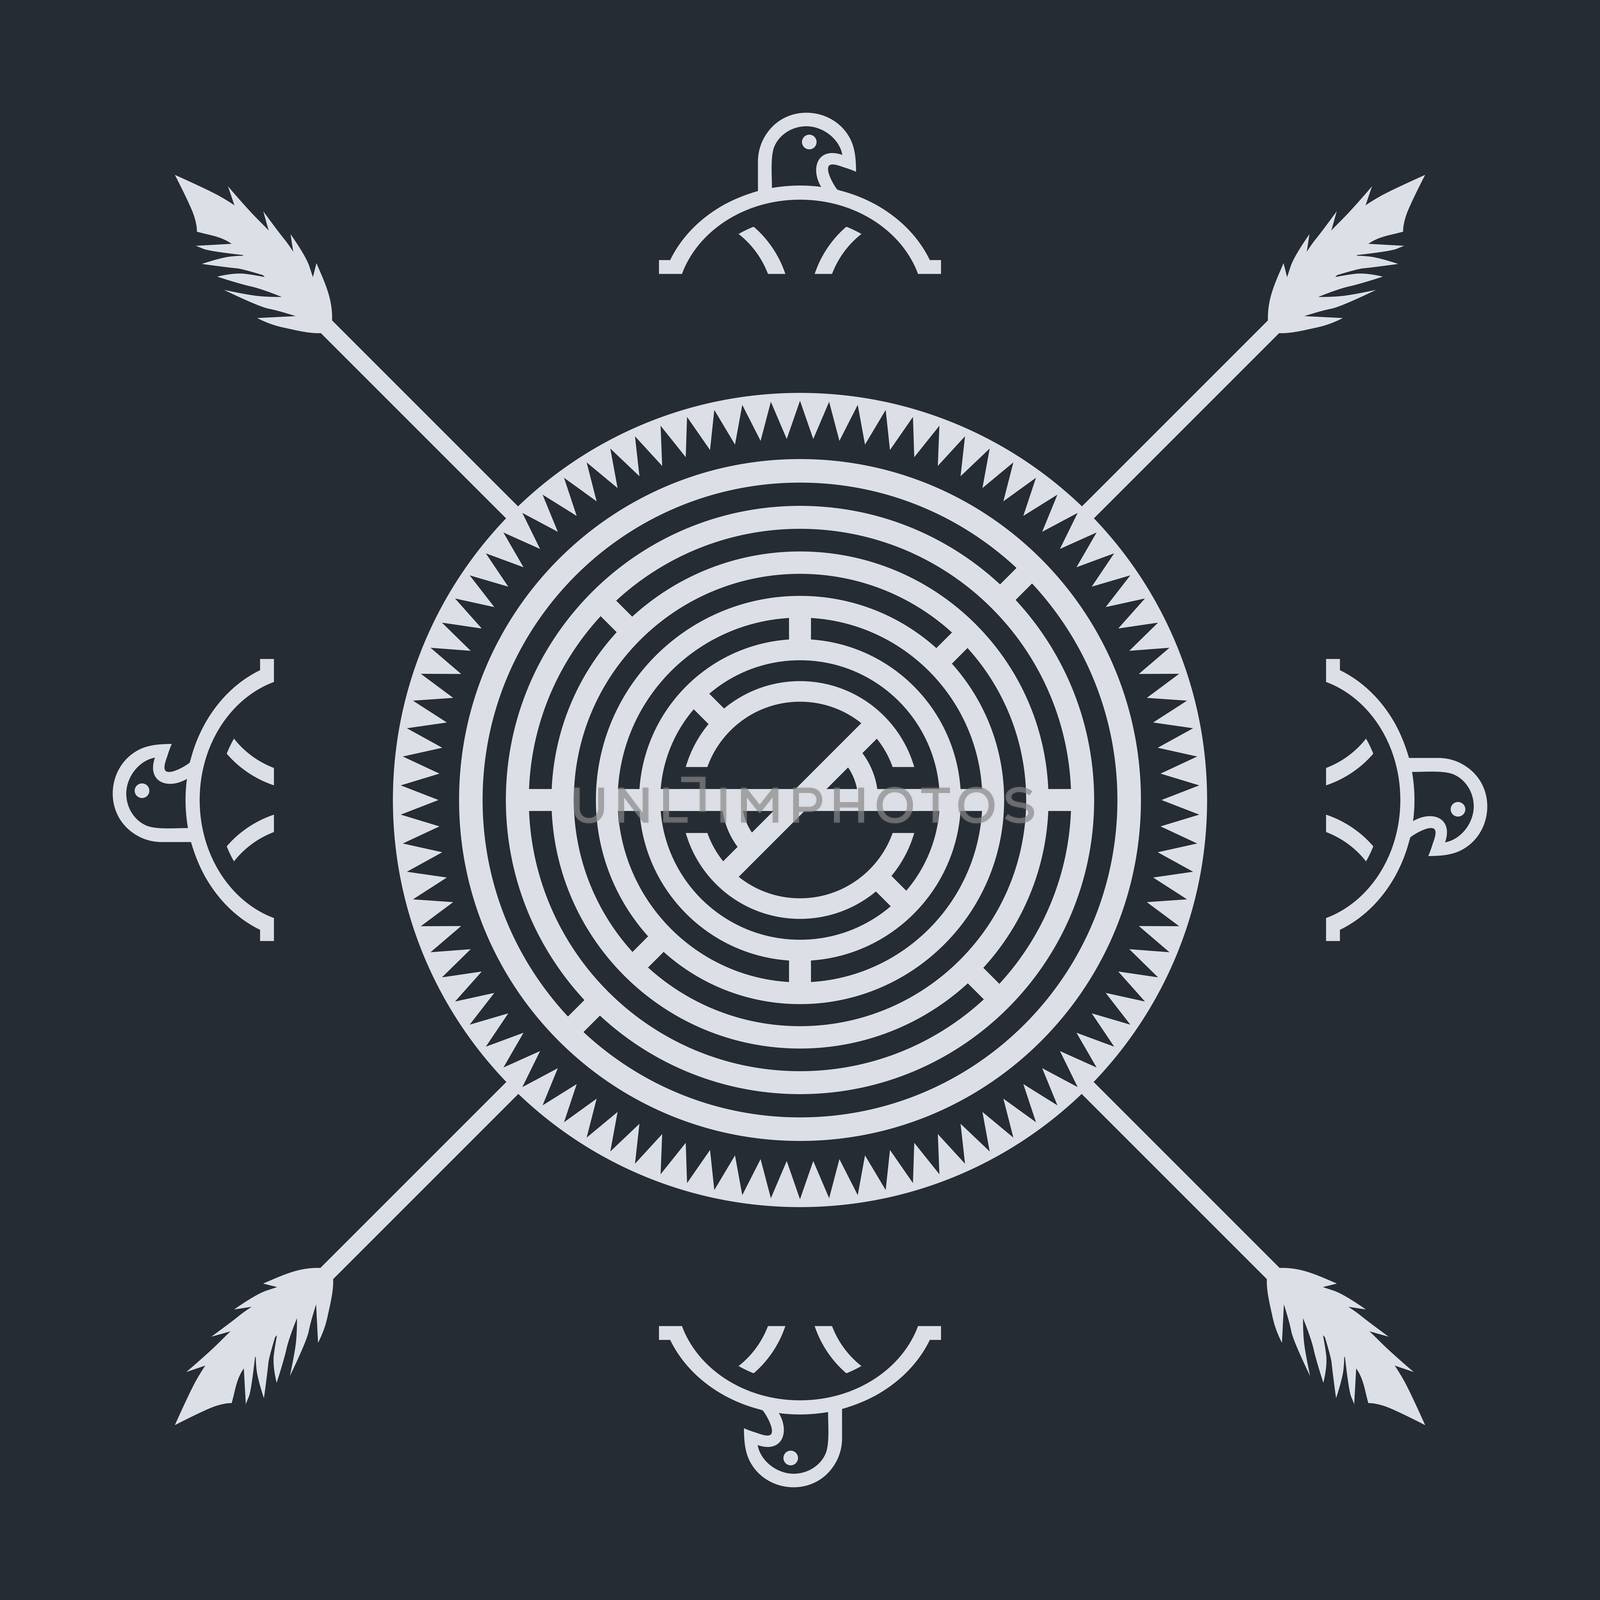 native ethnic art symbol theme vector illustration